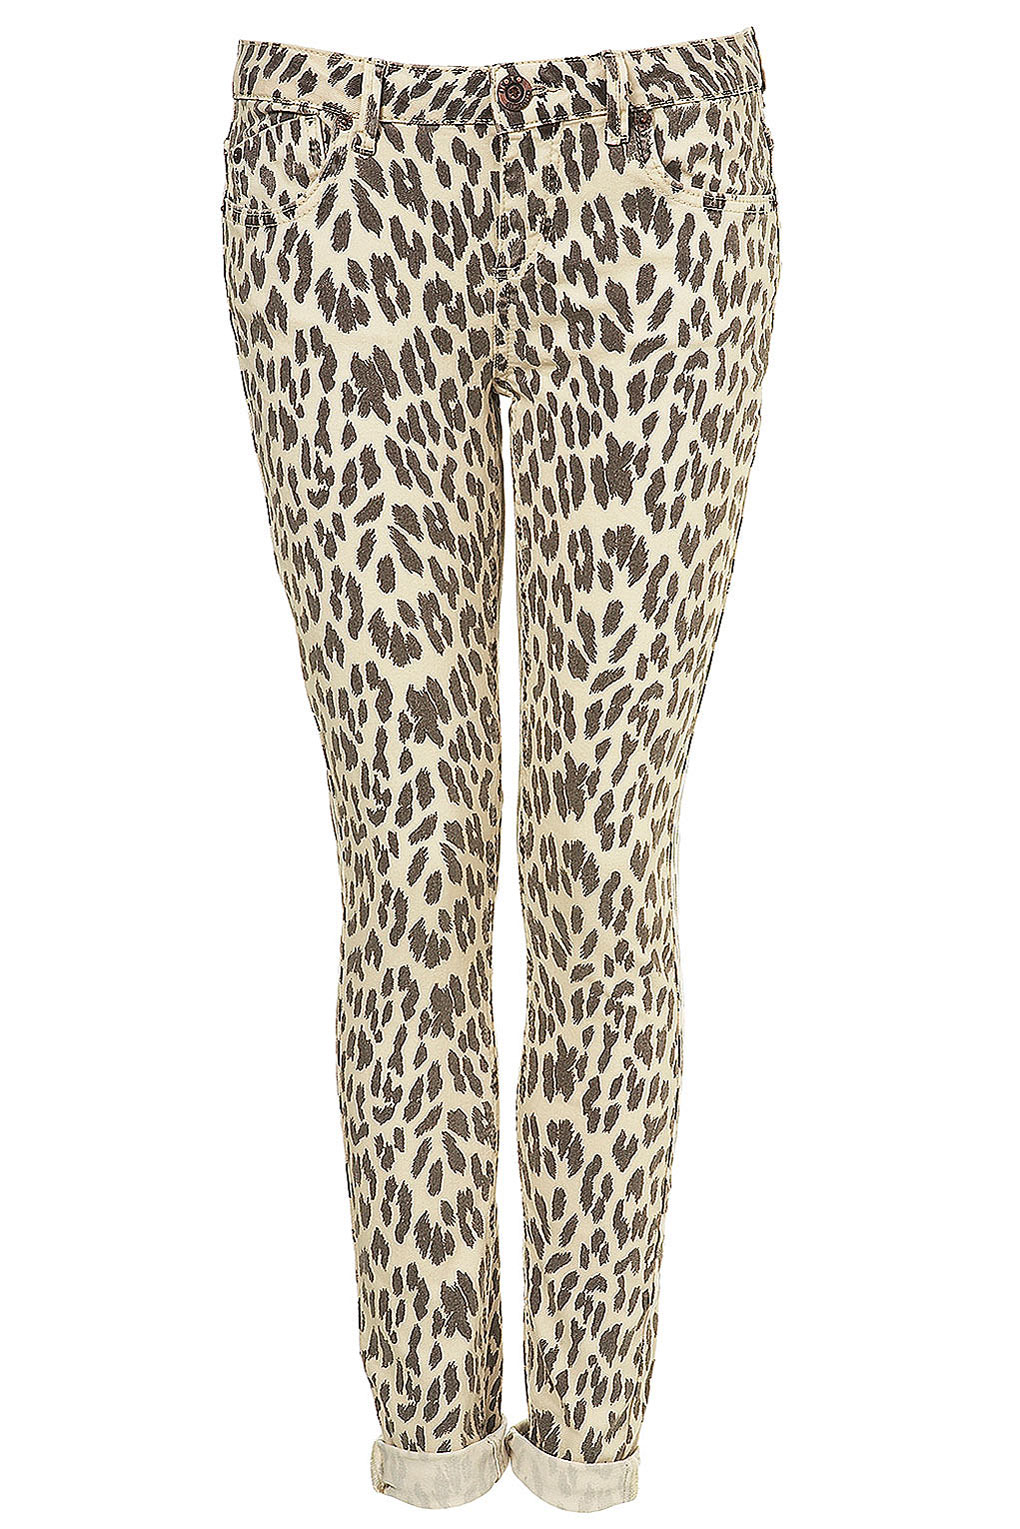 The Style Rawr: Topshop's 'Leopard Jeans' Make Me *RAWR*!